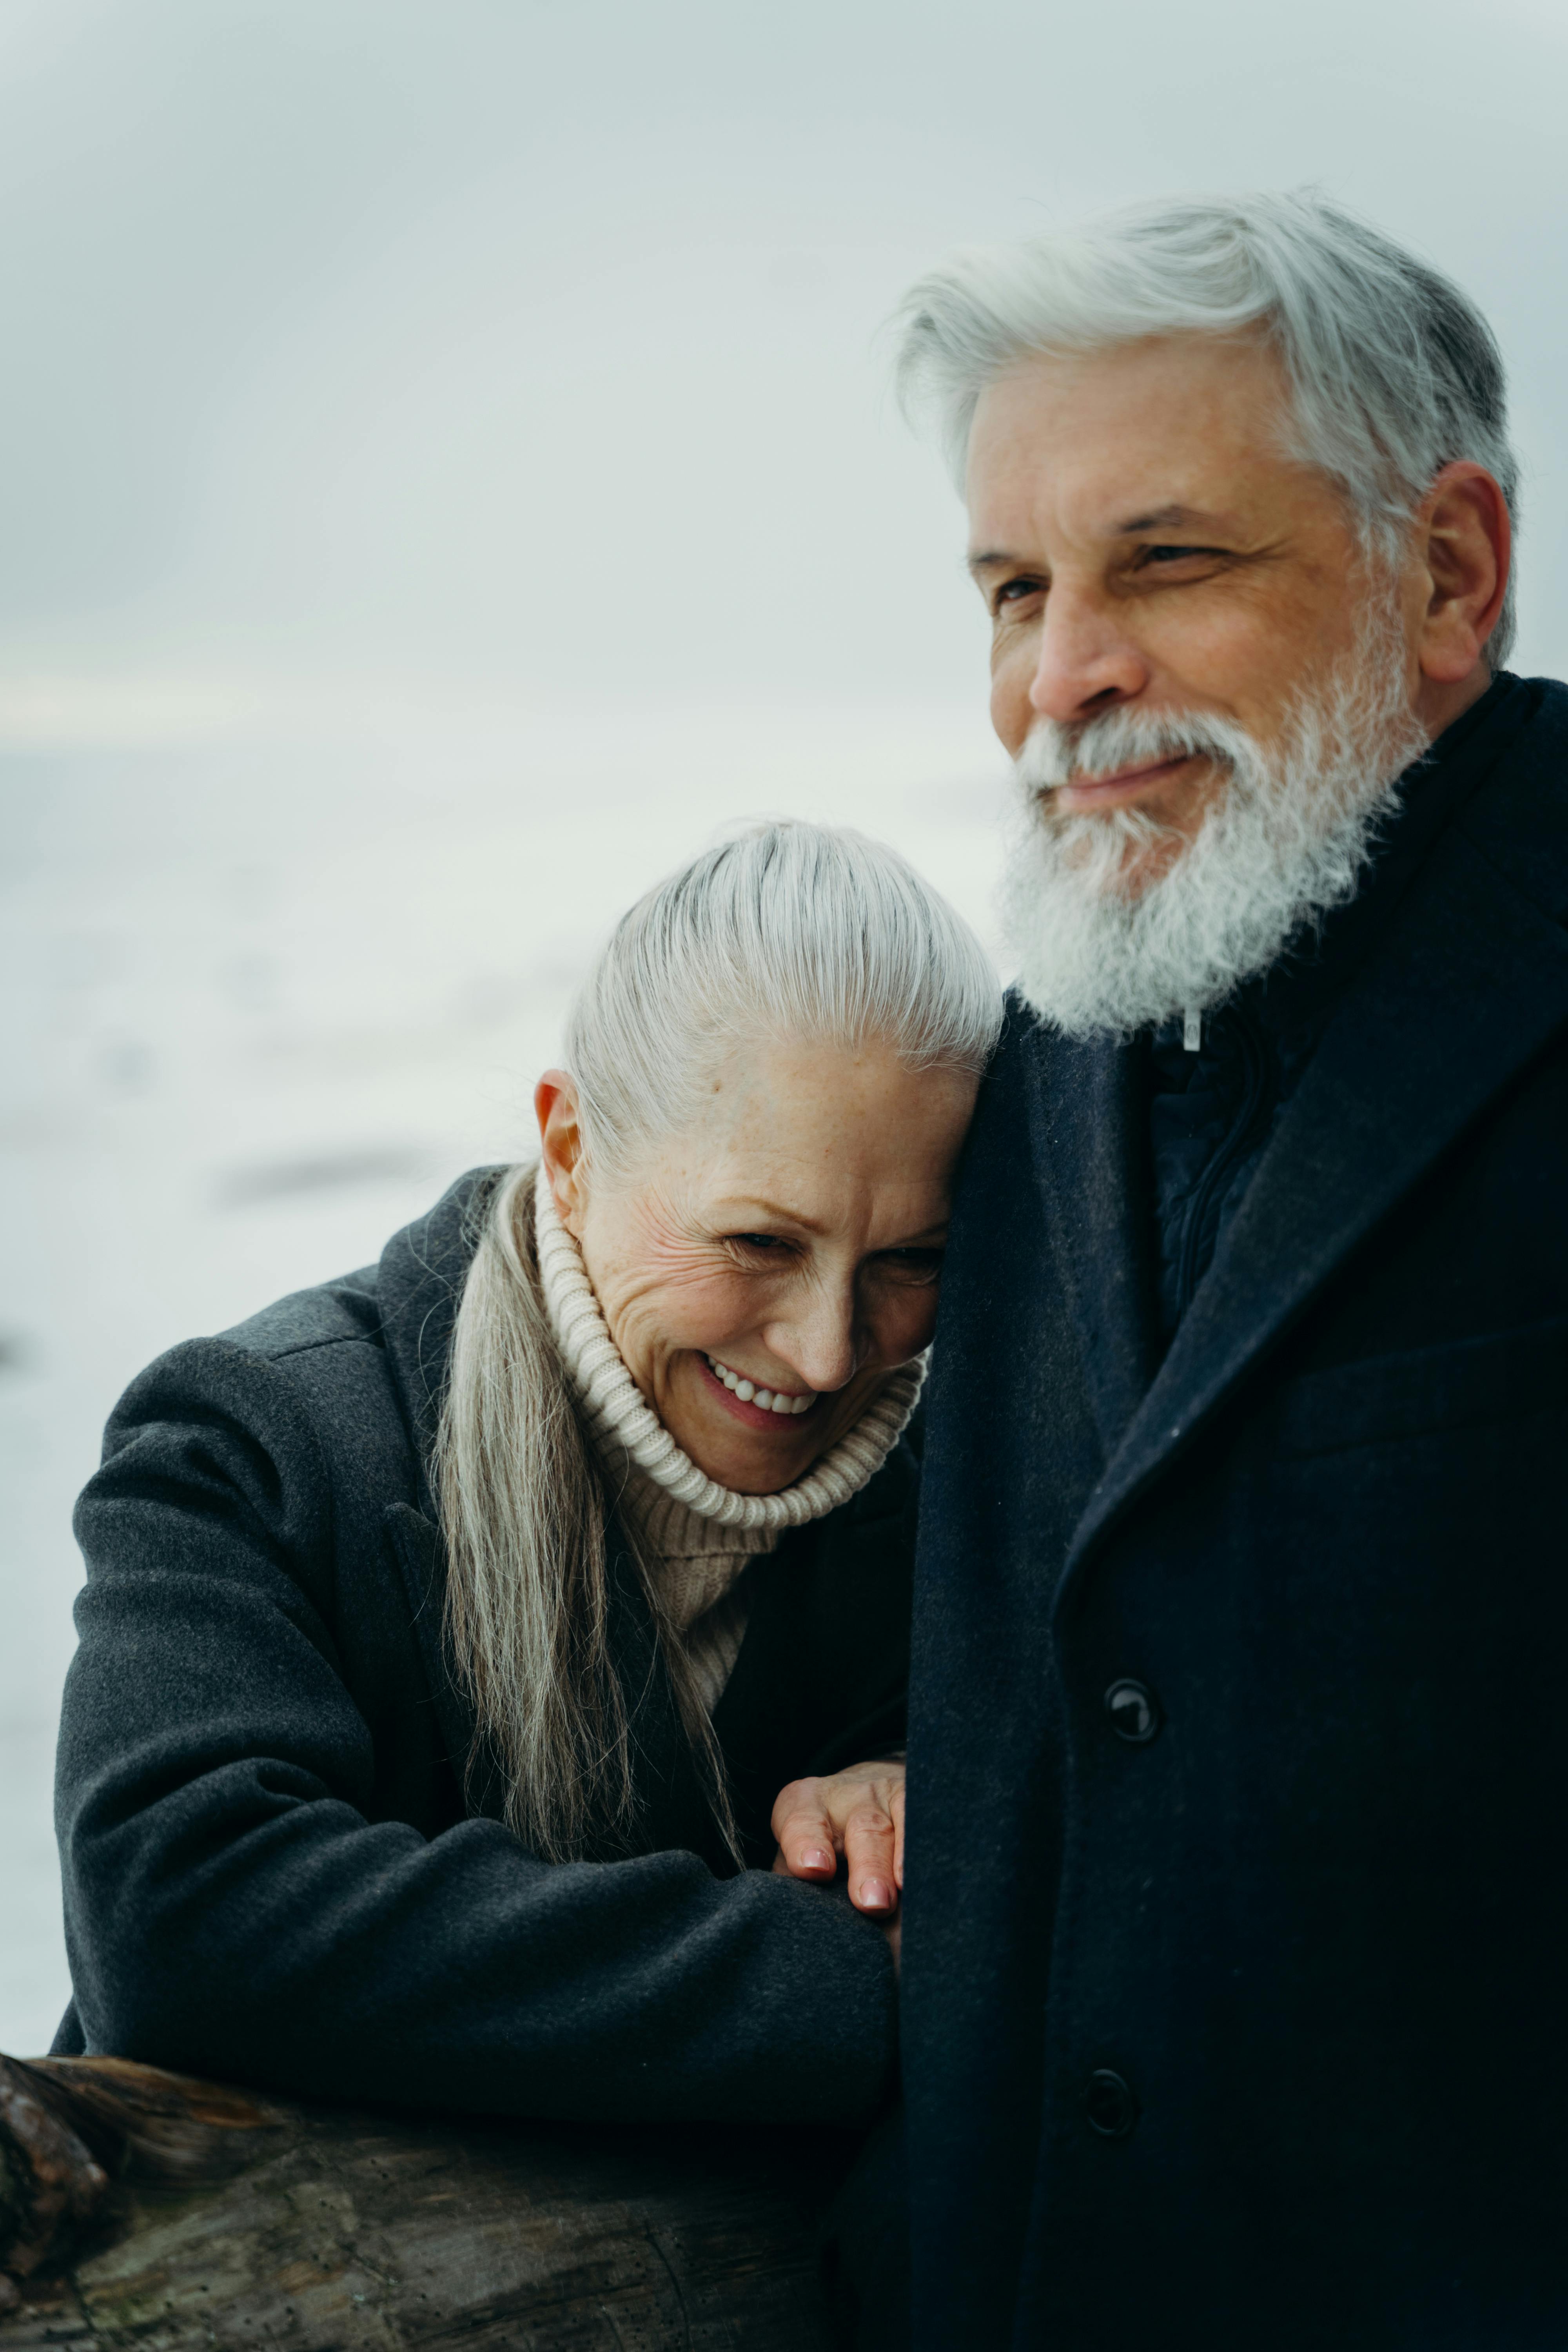 A happy elderly couple | Source: Pexels